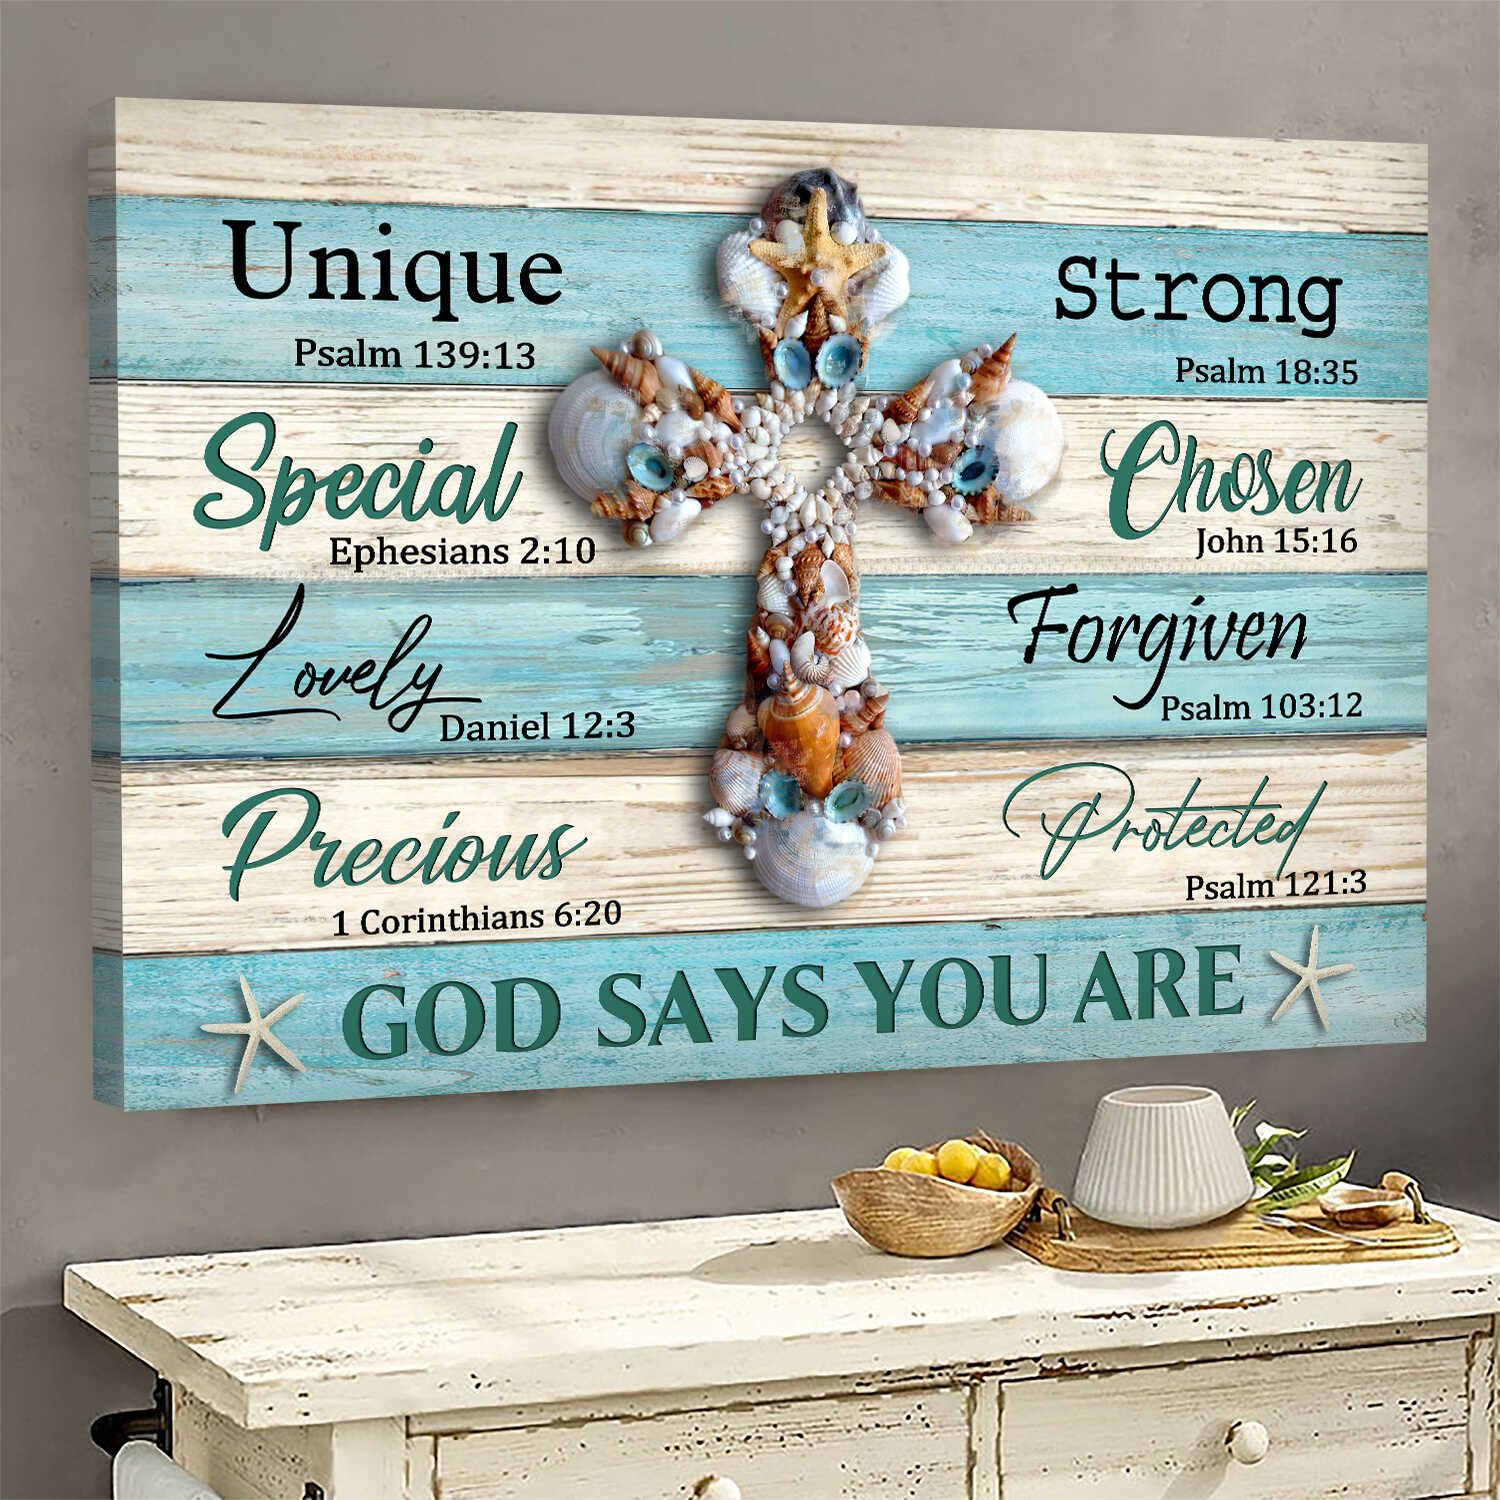 Seashell cross, God says you are - Jesus Landscape Canvas Prints, Wall Art